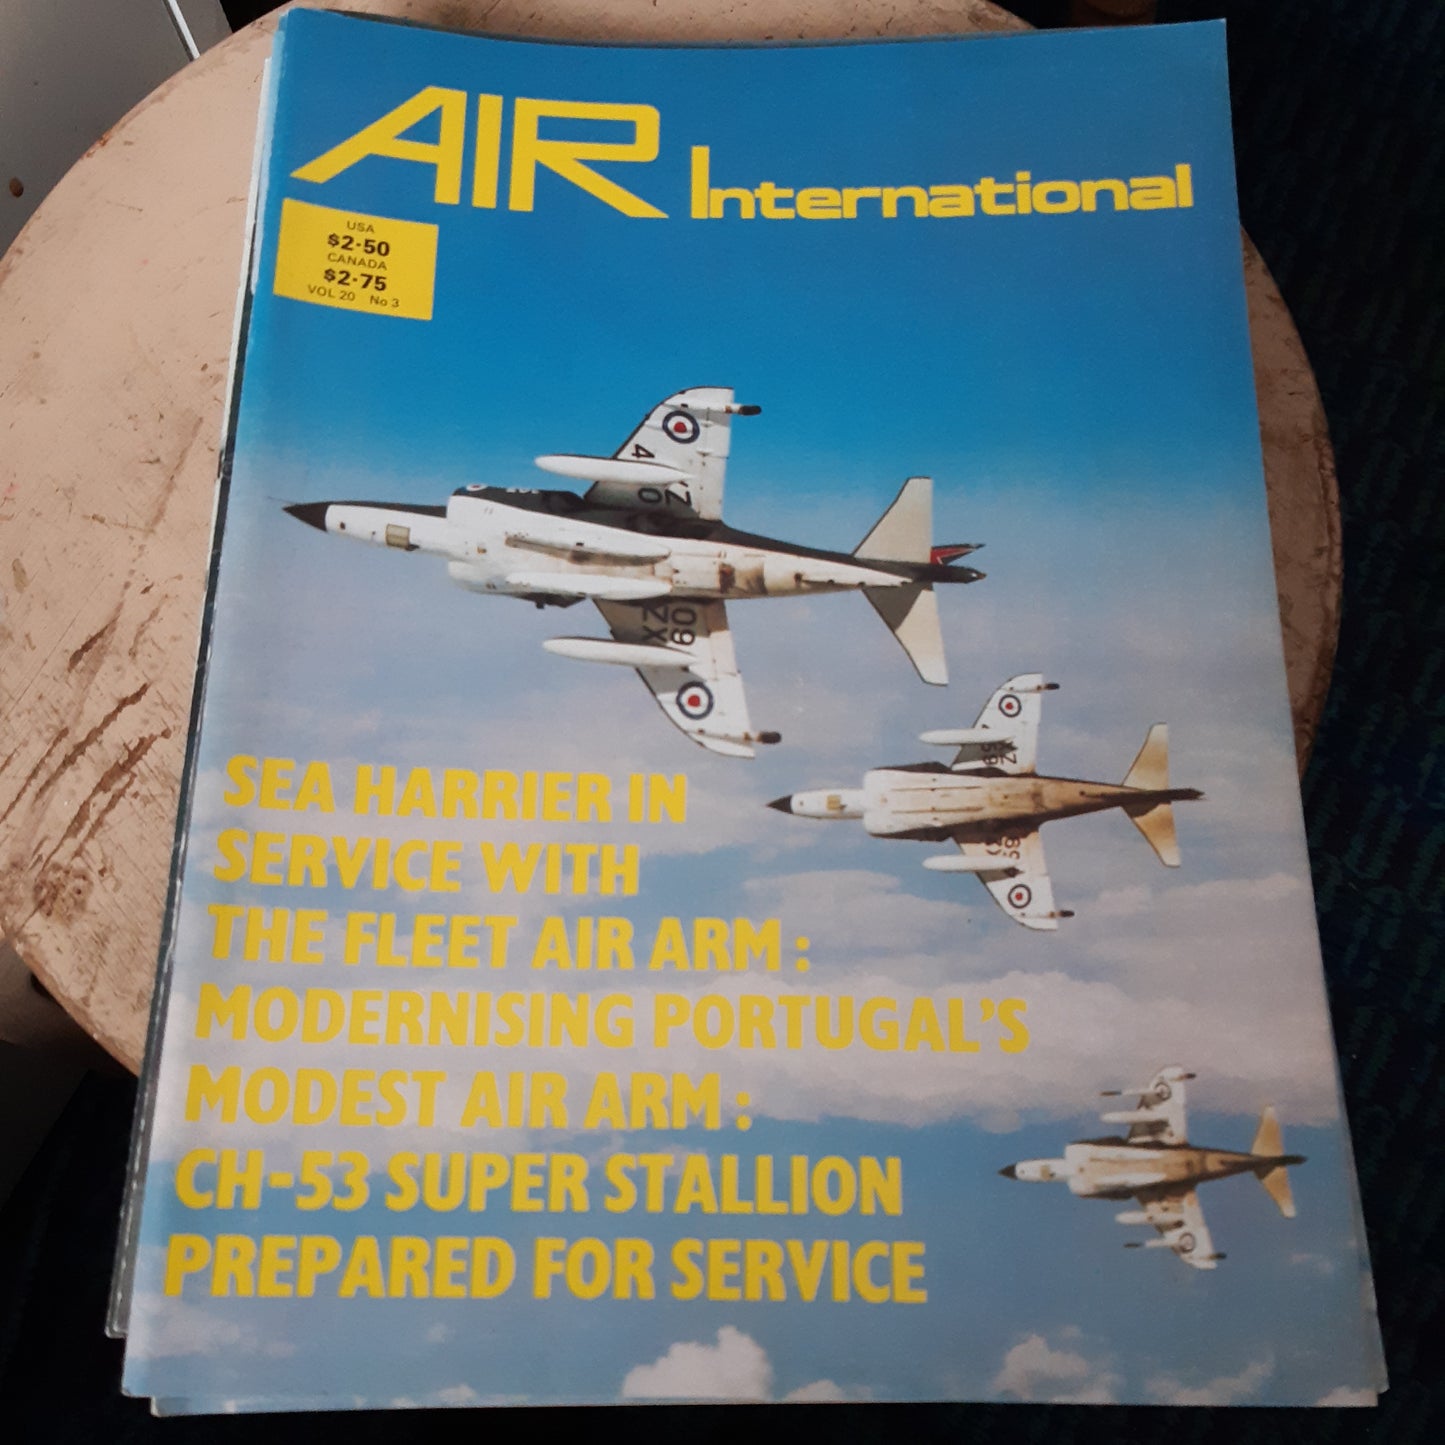 air international march 1981 vol 20 no 3